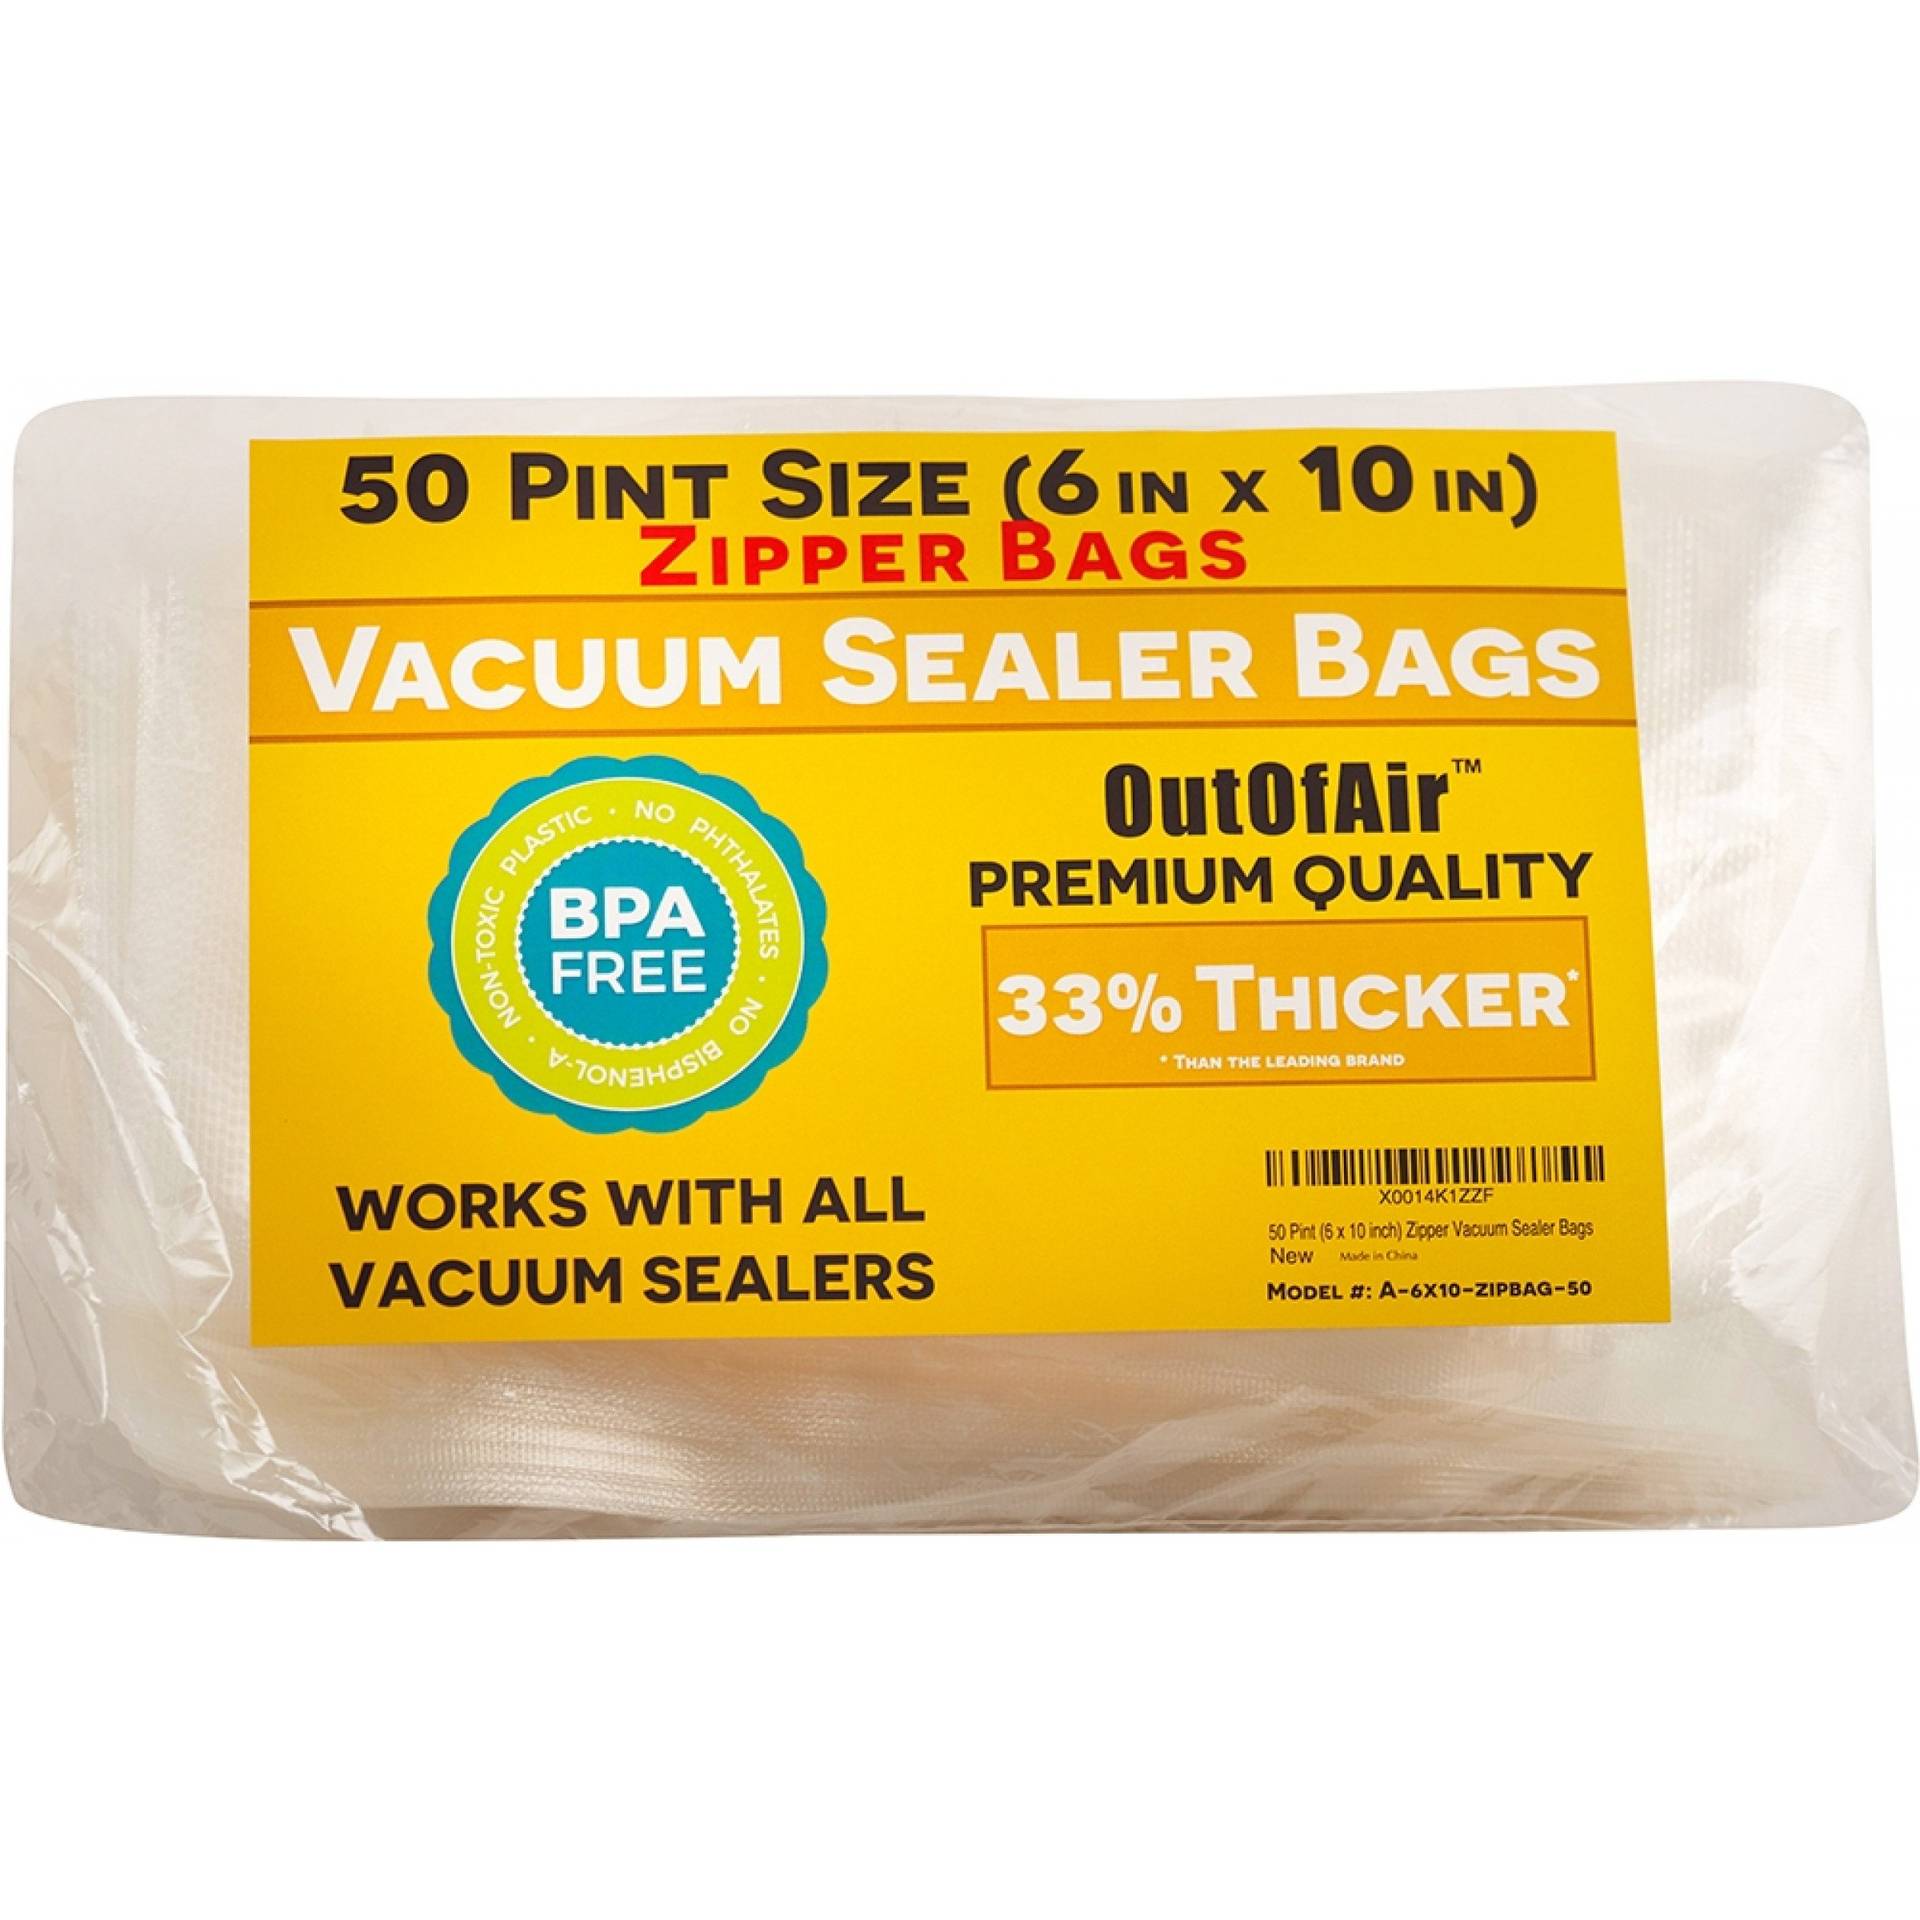 50 Zipper Vacuum Sealer Bags: Pint Size (6 inch x 10 inch) - OutOfAir Vacuum Sealer Zip Bags for FoodSaver, Weston, Other Savers. 33% Thicker BPA Free